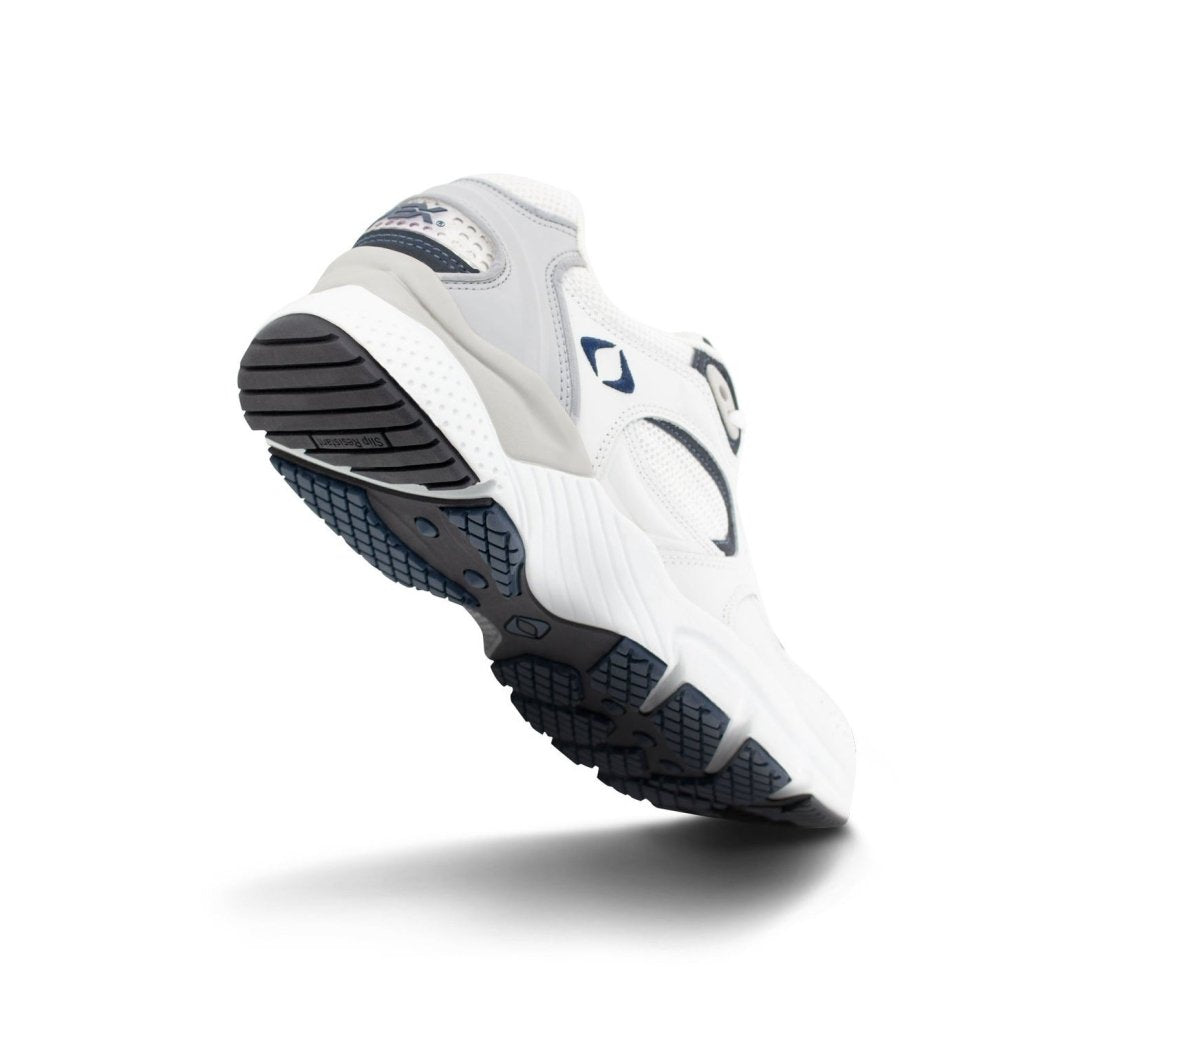 APEX X521M BOSS RUNNER MEN'S ACTIVE SHOE IN WHITE/NAVY. - TLW Shoes